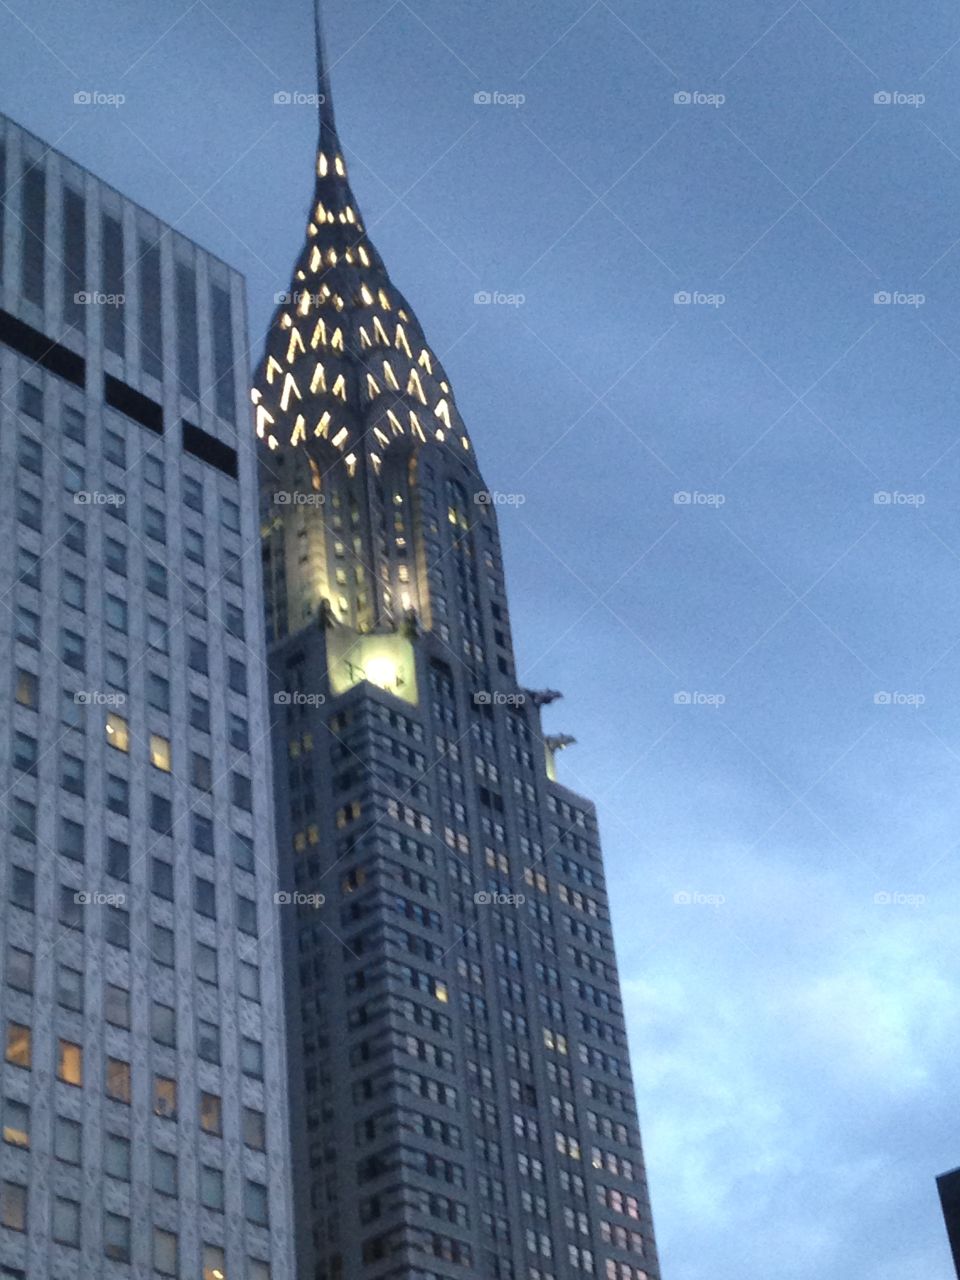 Chrysler. Picture of the Chrysler building from MSK office